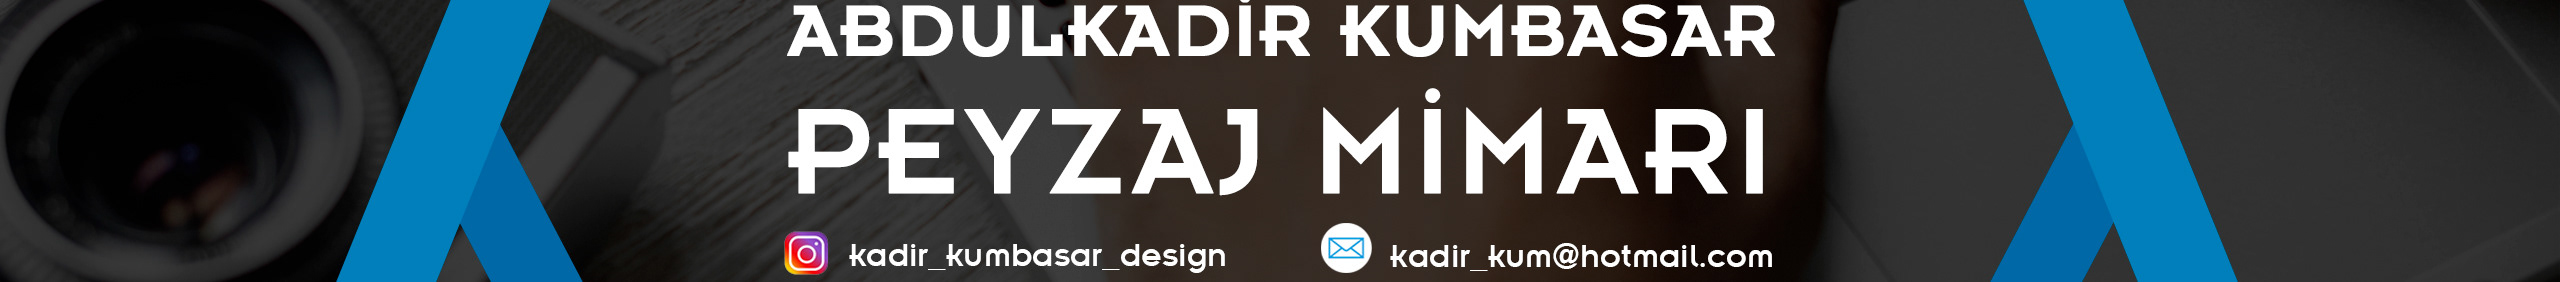 Abdulkadir KUMBASAR のプロファイルバナー